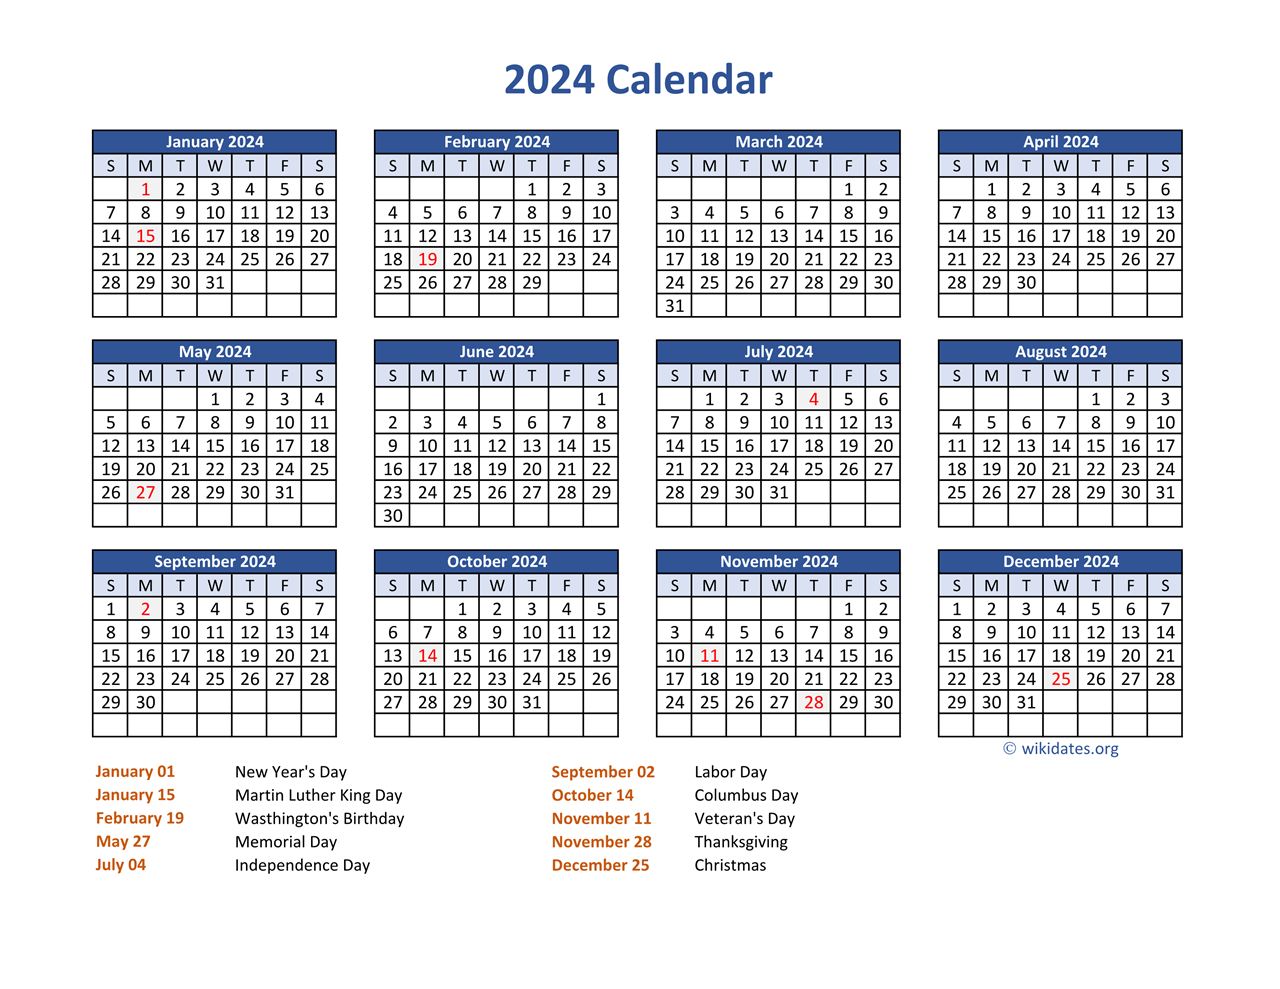 Pdf Calendar 2024 With Federal Holidays | Wikidates for 2024 Printable Calendar With Federal Holidays